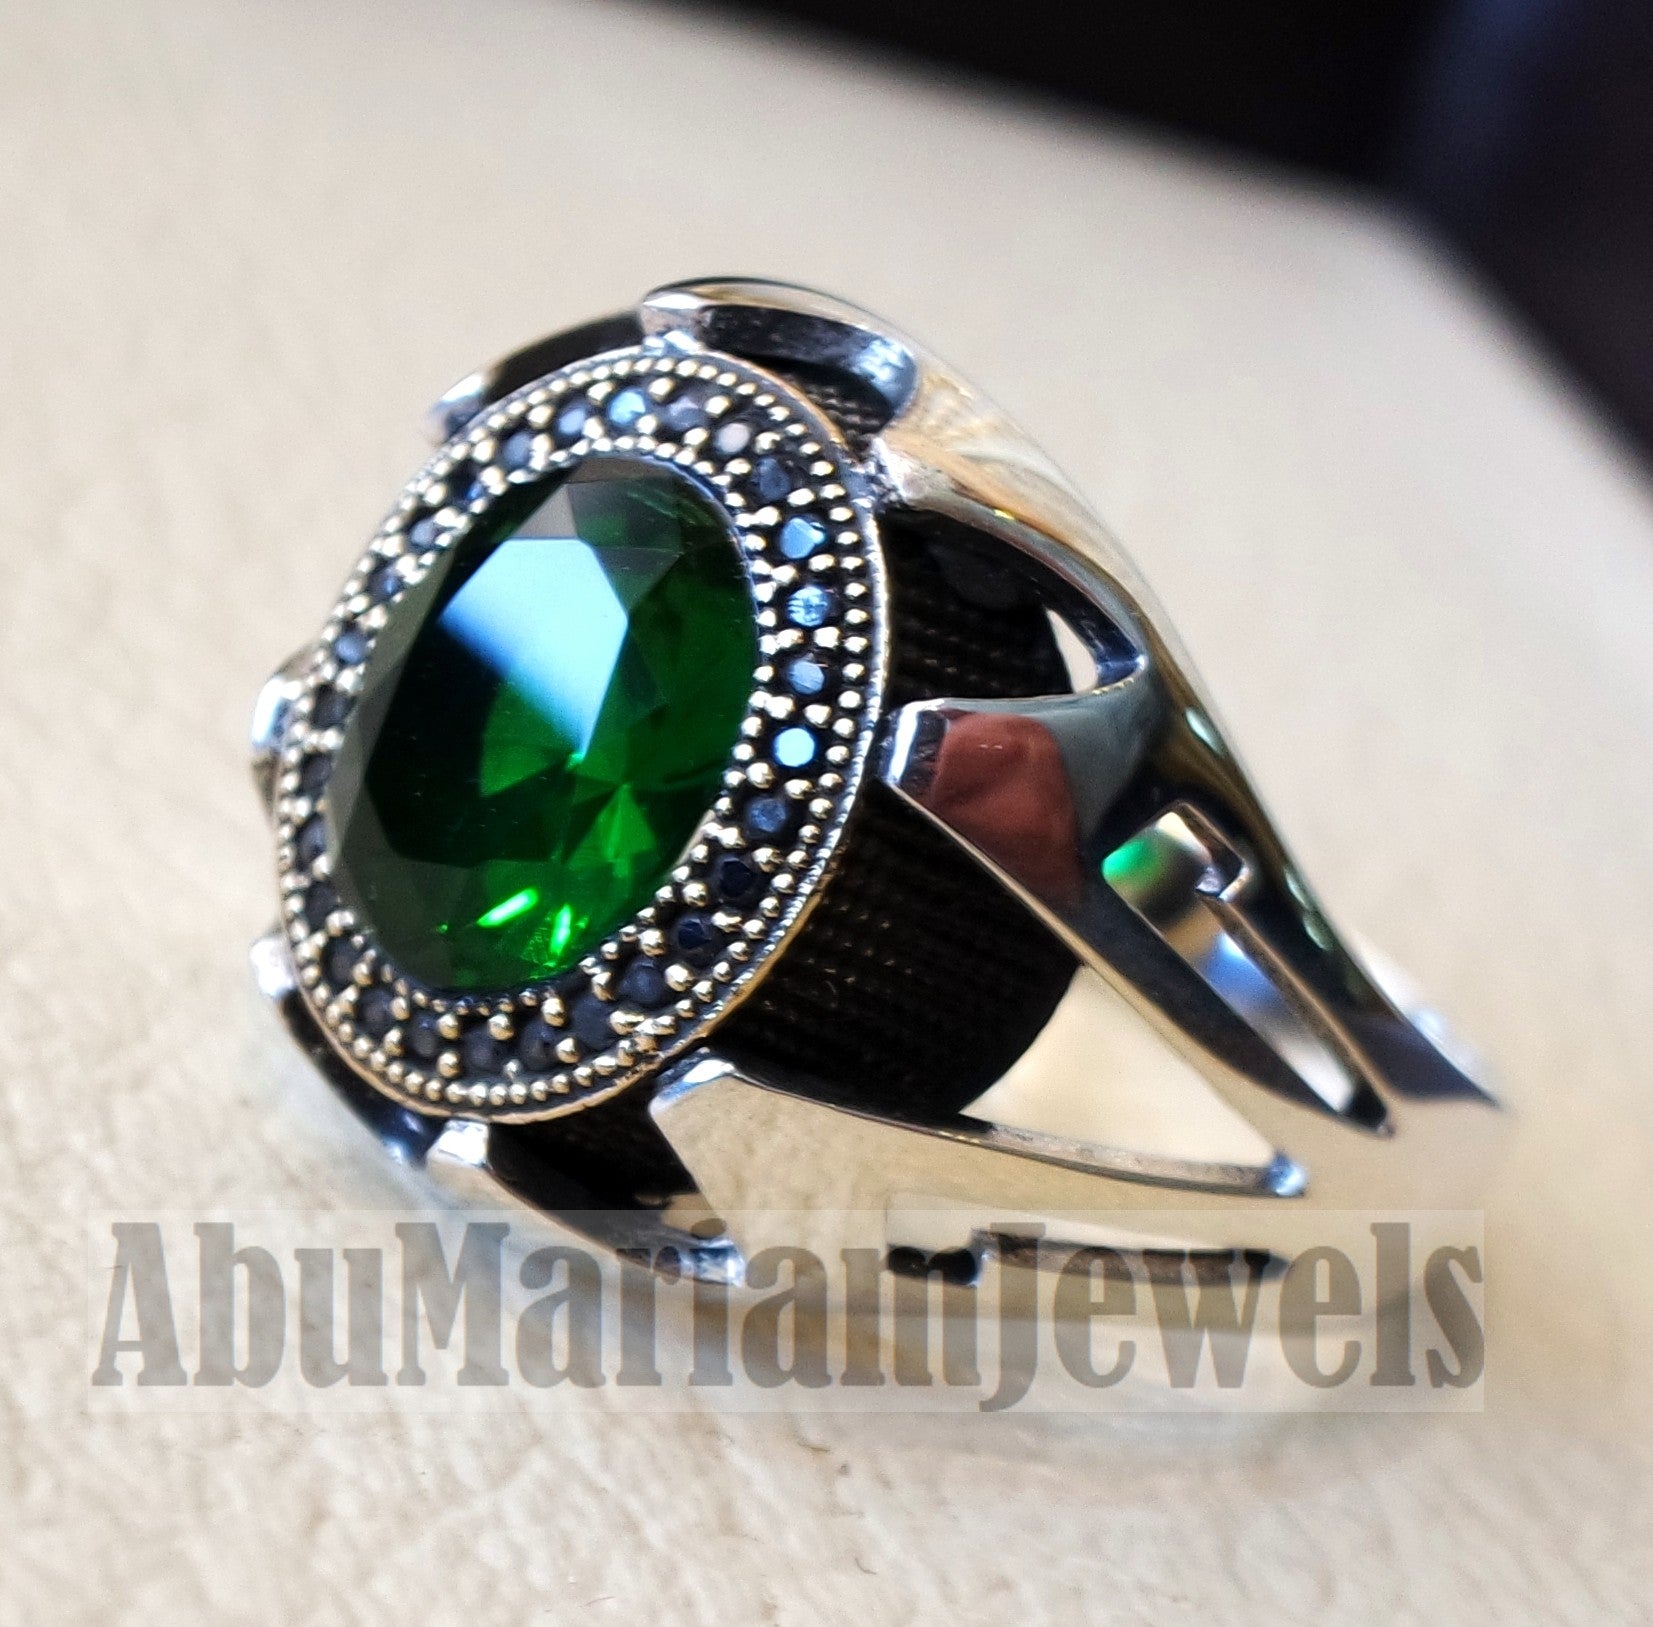 Green corundum identical to genuine emerald stone black cubic zircon on bronze frame stunning sterling silver 925 men ring all sizes